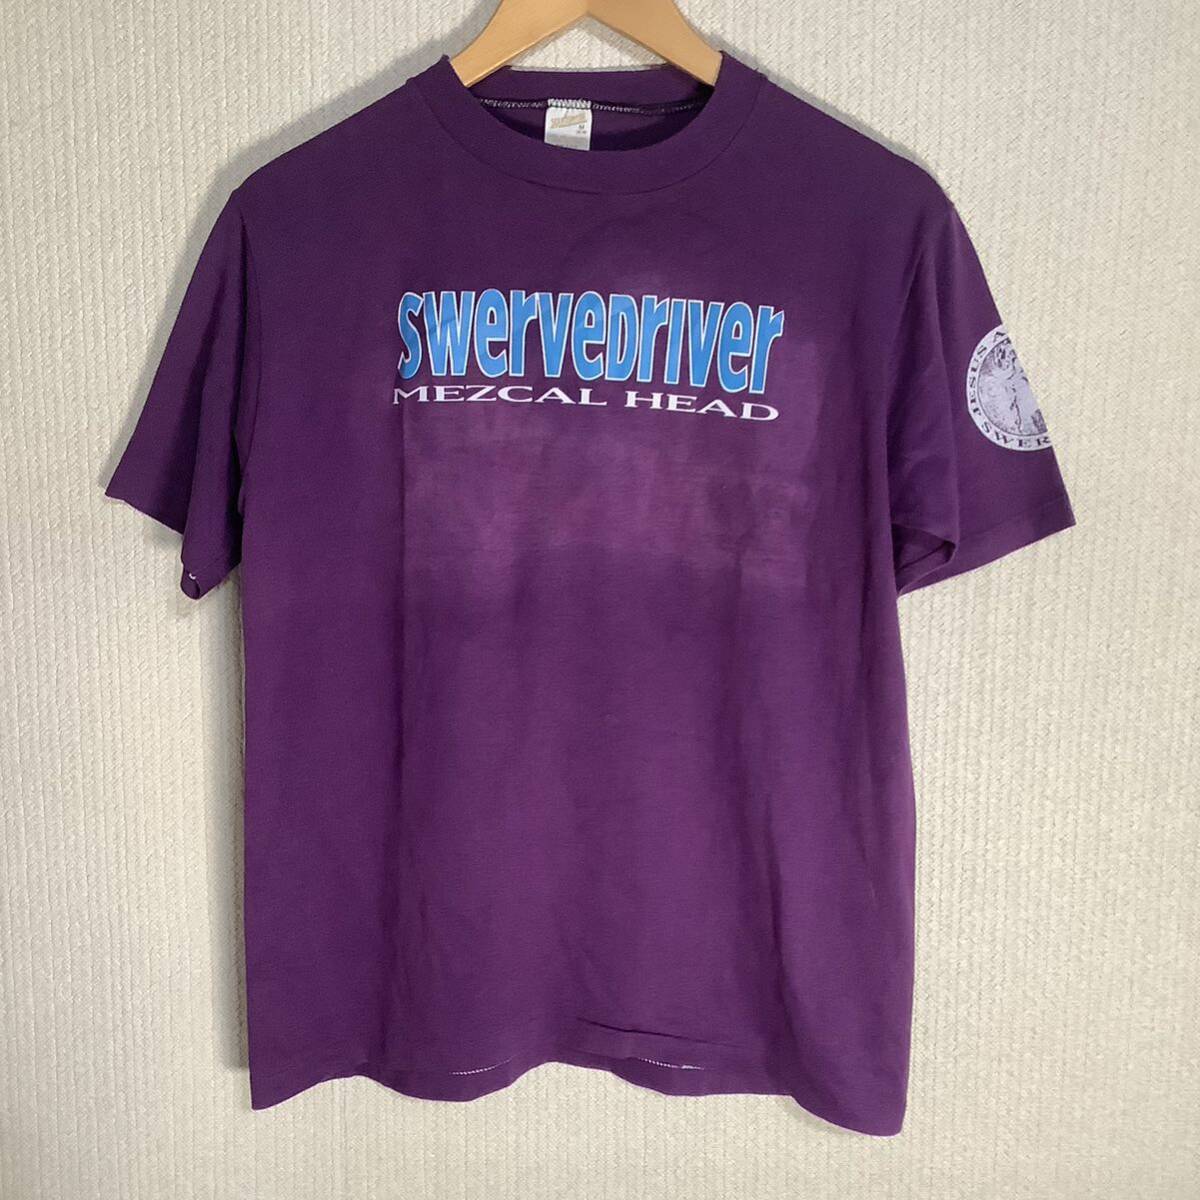 1980s-90s Swervedriver Mezcal Head 当時もの ヴィンテージ Tシャツ シューゲイザー 英国 ロック 80s 90s _画像1